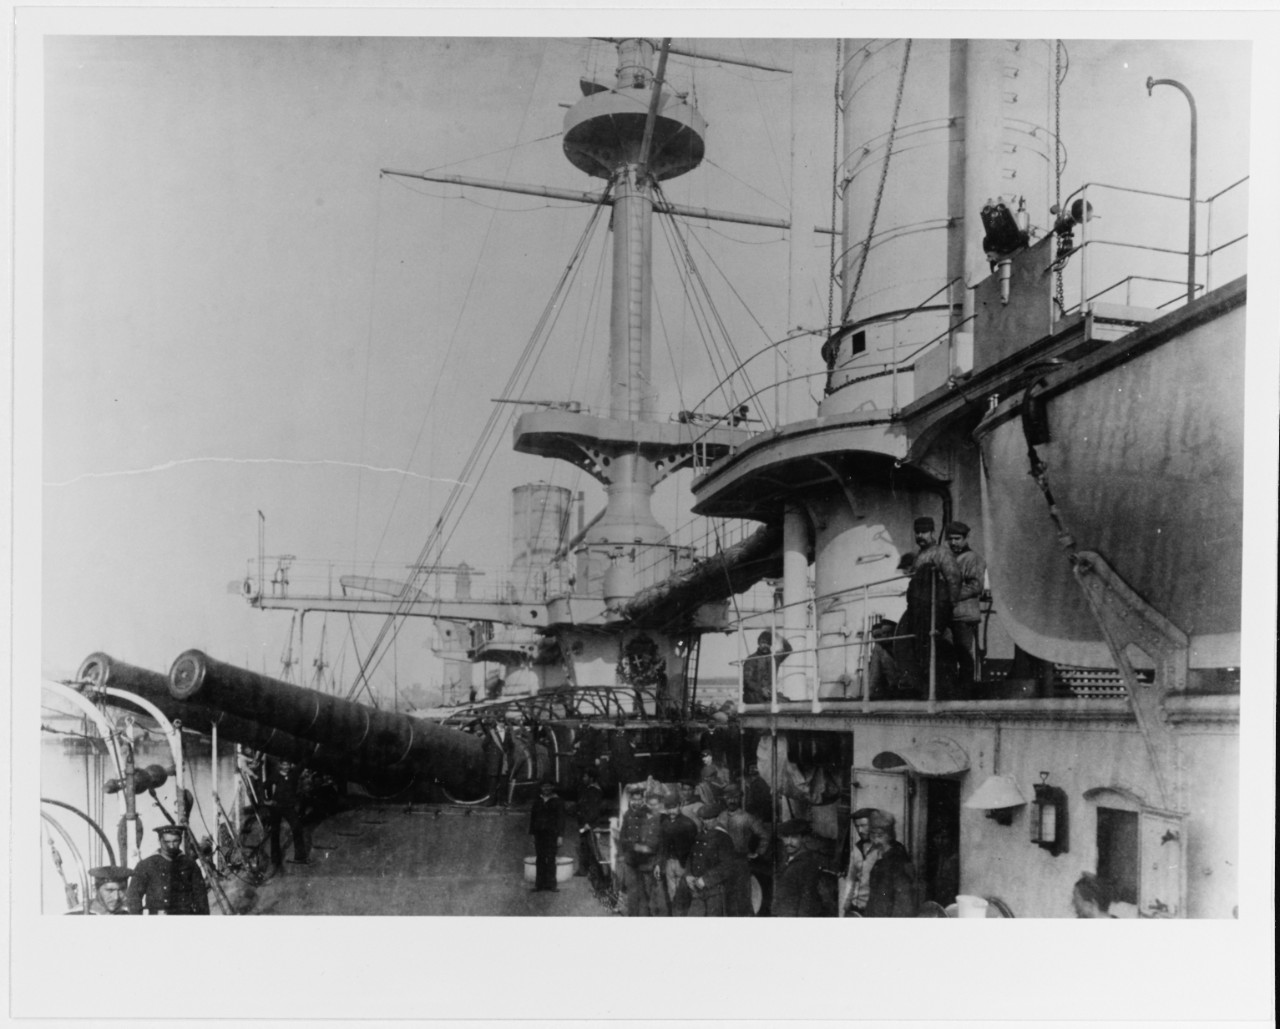 RUGGIERO DI LAURIA (Italian battleship, 1885-1909)